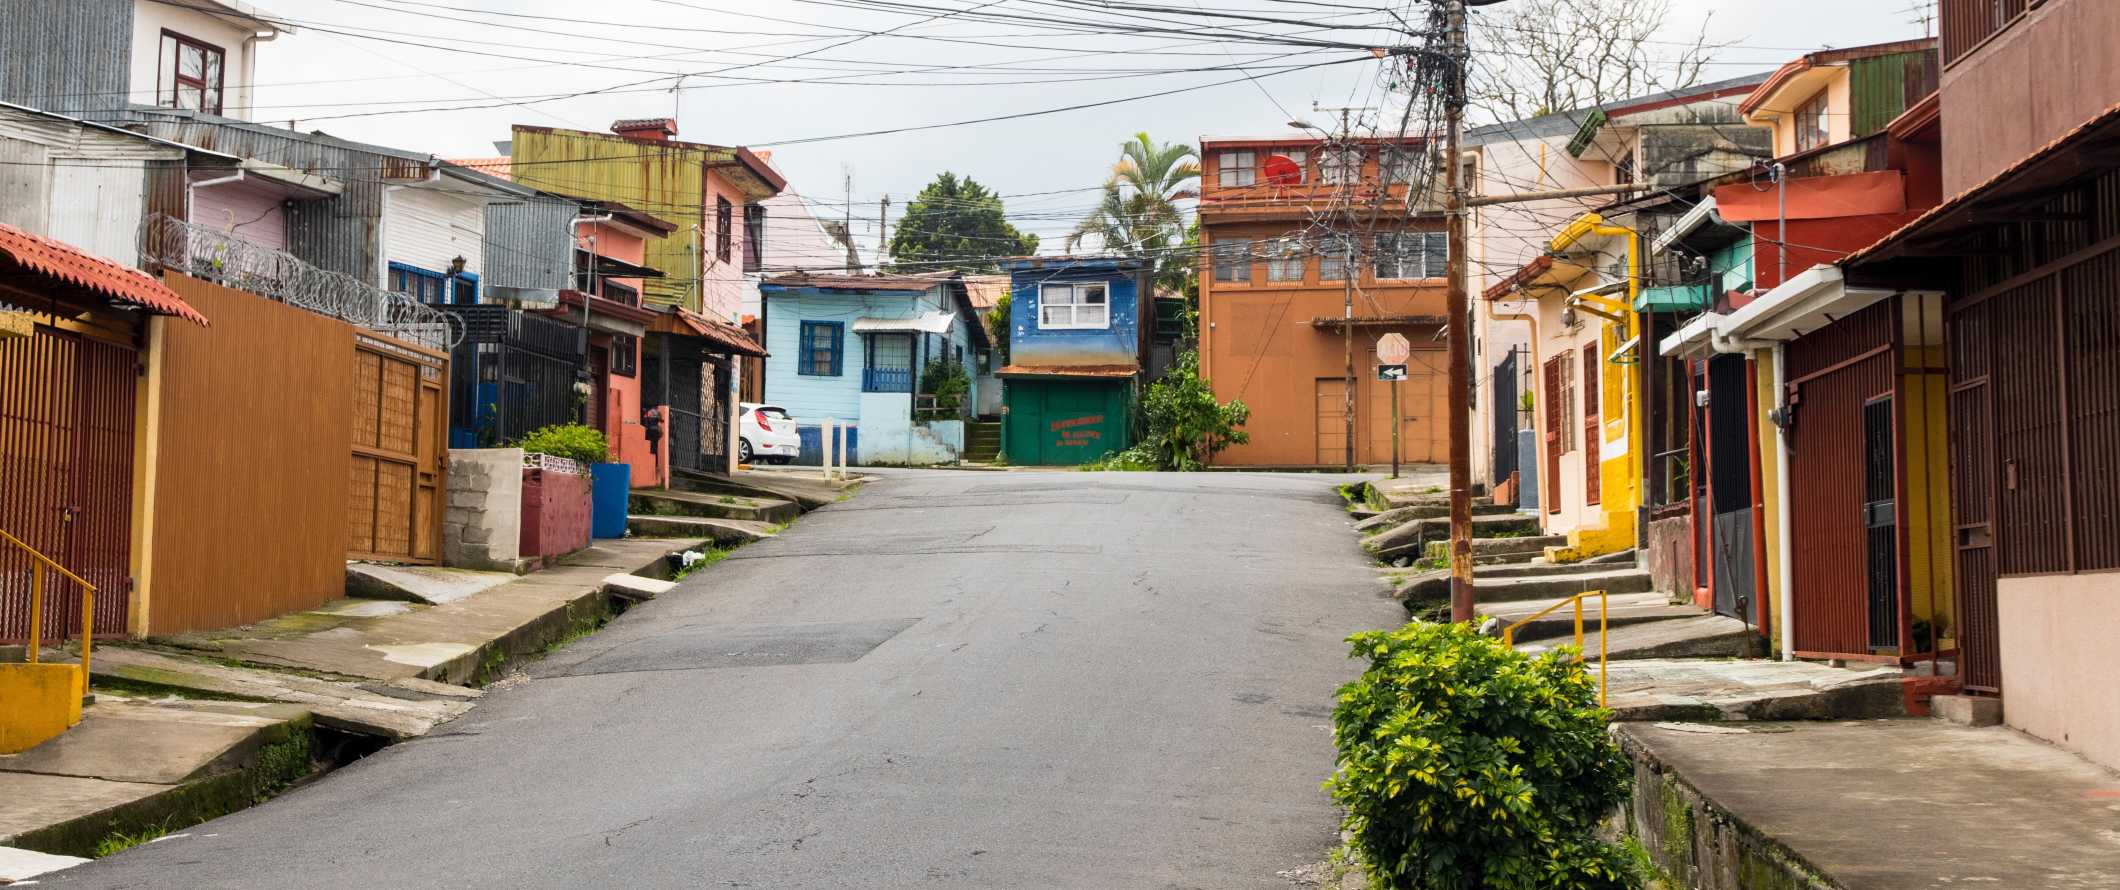 A residential neighborhood in San Jose, the capital of Costa Rica